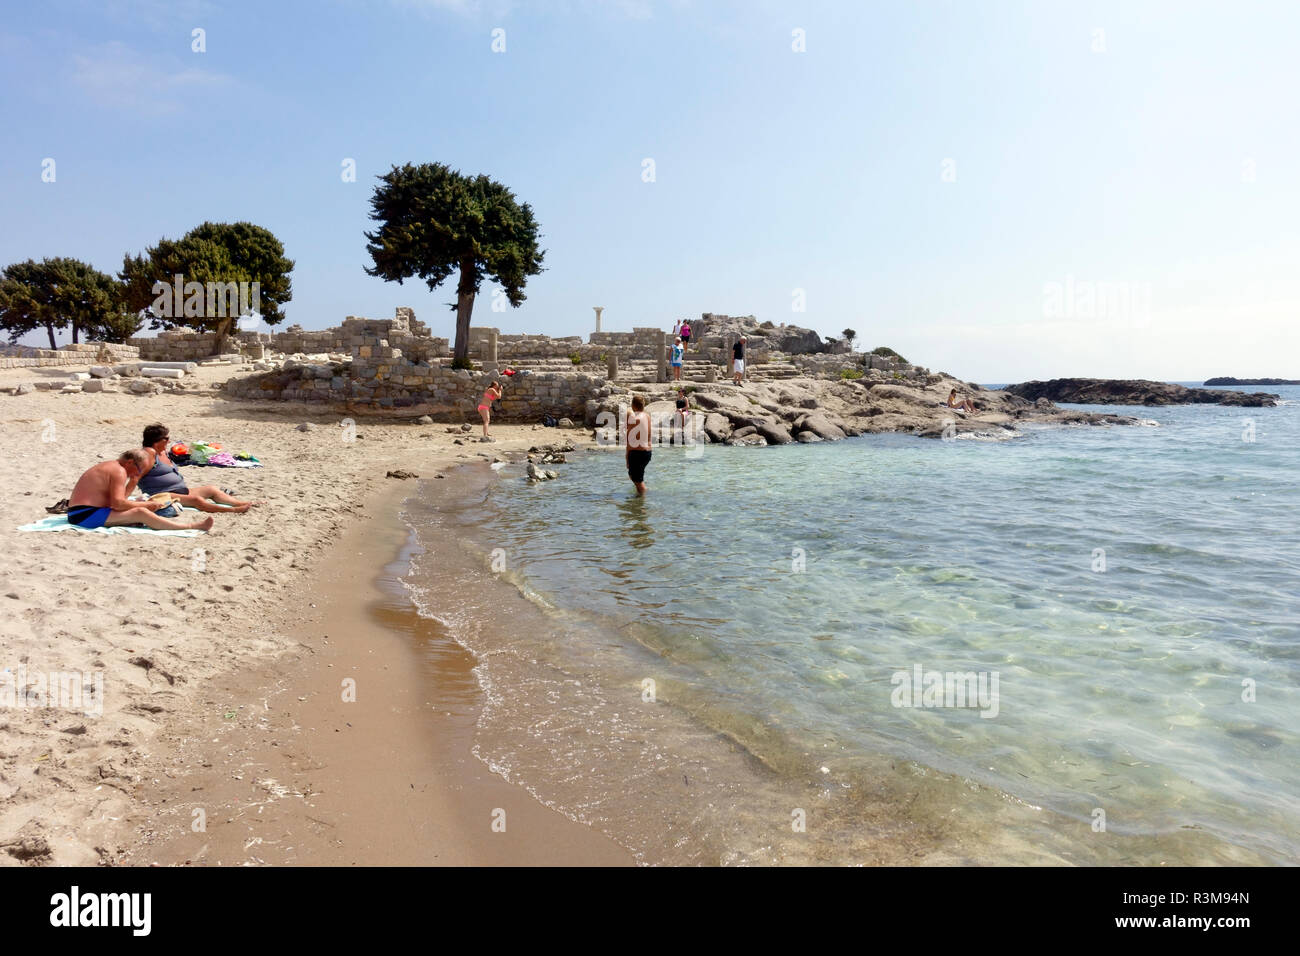 Kamari beach, Kefalos, Kos, Greece with the ancient ruins of the Basilicas of Saint Stephen or Basilicas of Agios Stefanos in the background Stock Photo